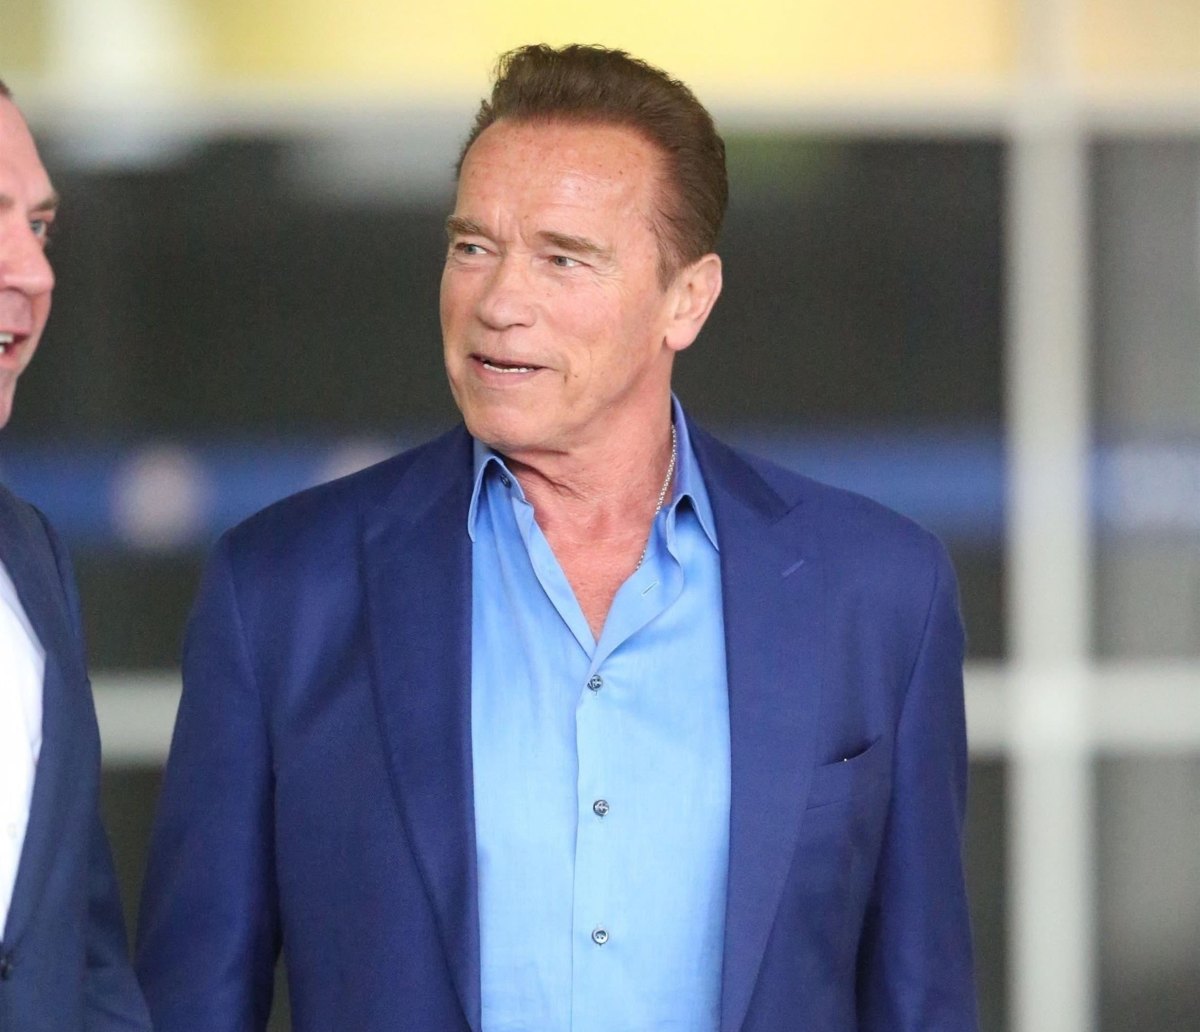 Arnold Schwarzenegger a fost operat pe cord deschis! Ce spun medicii